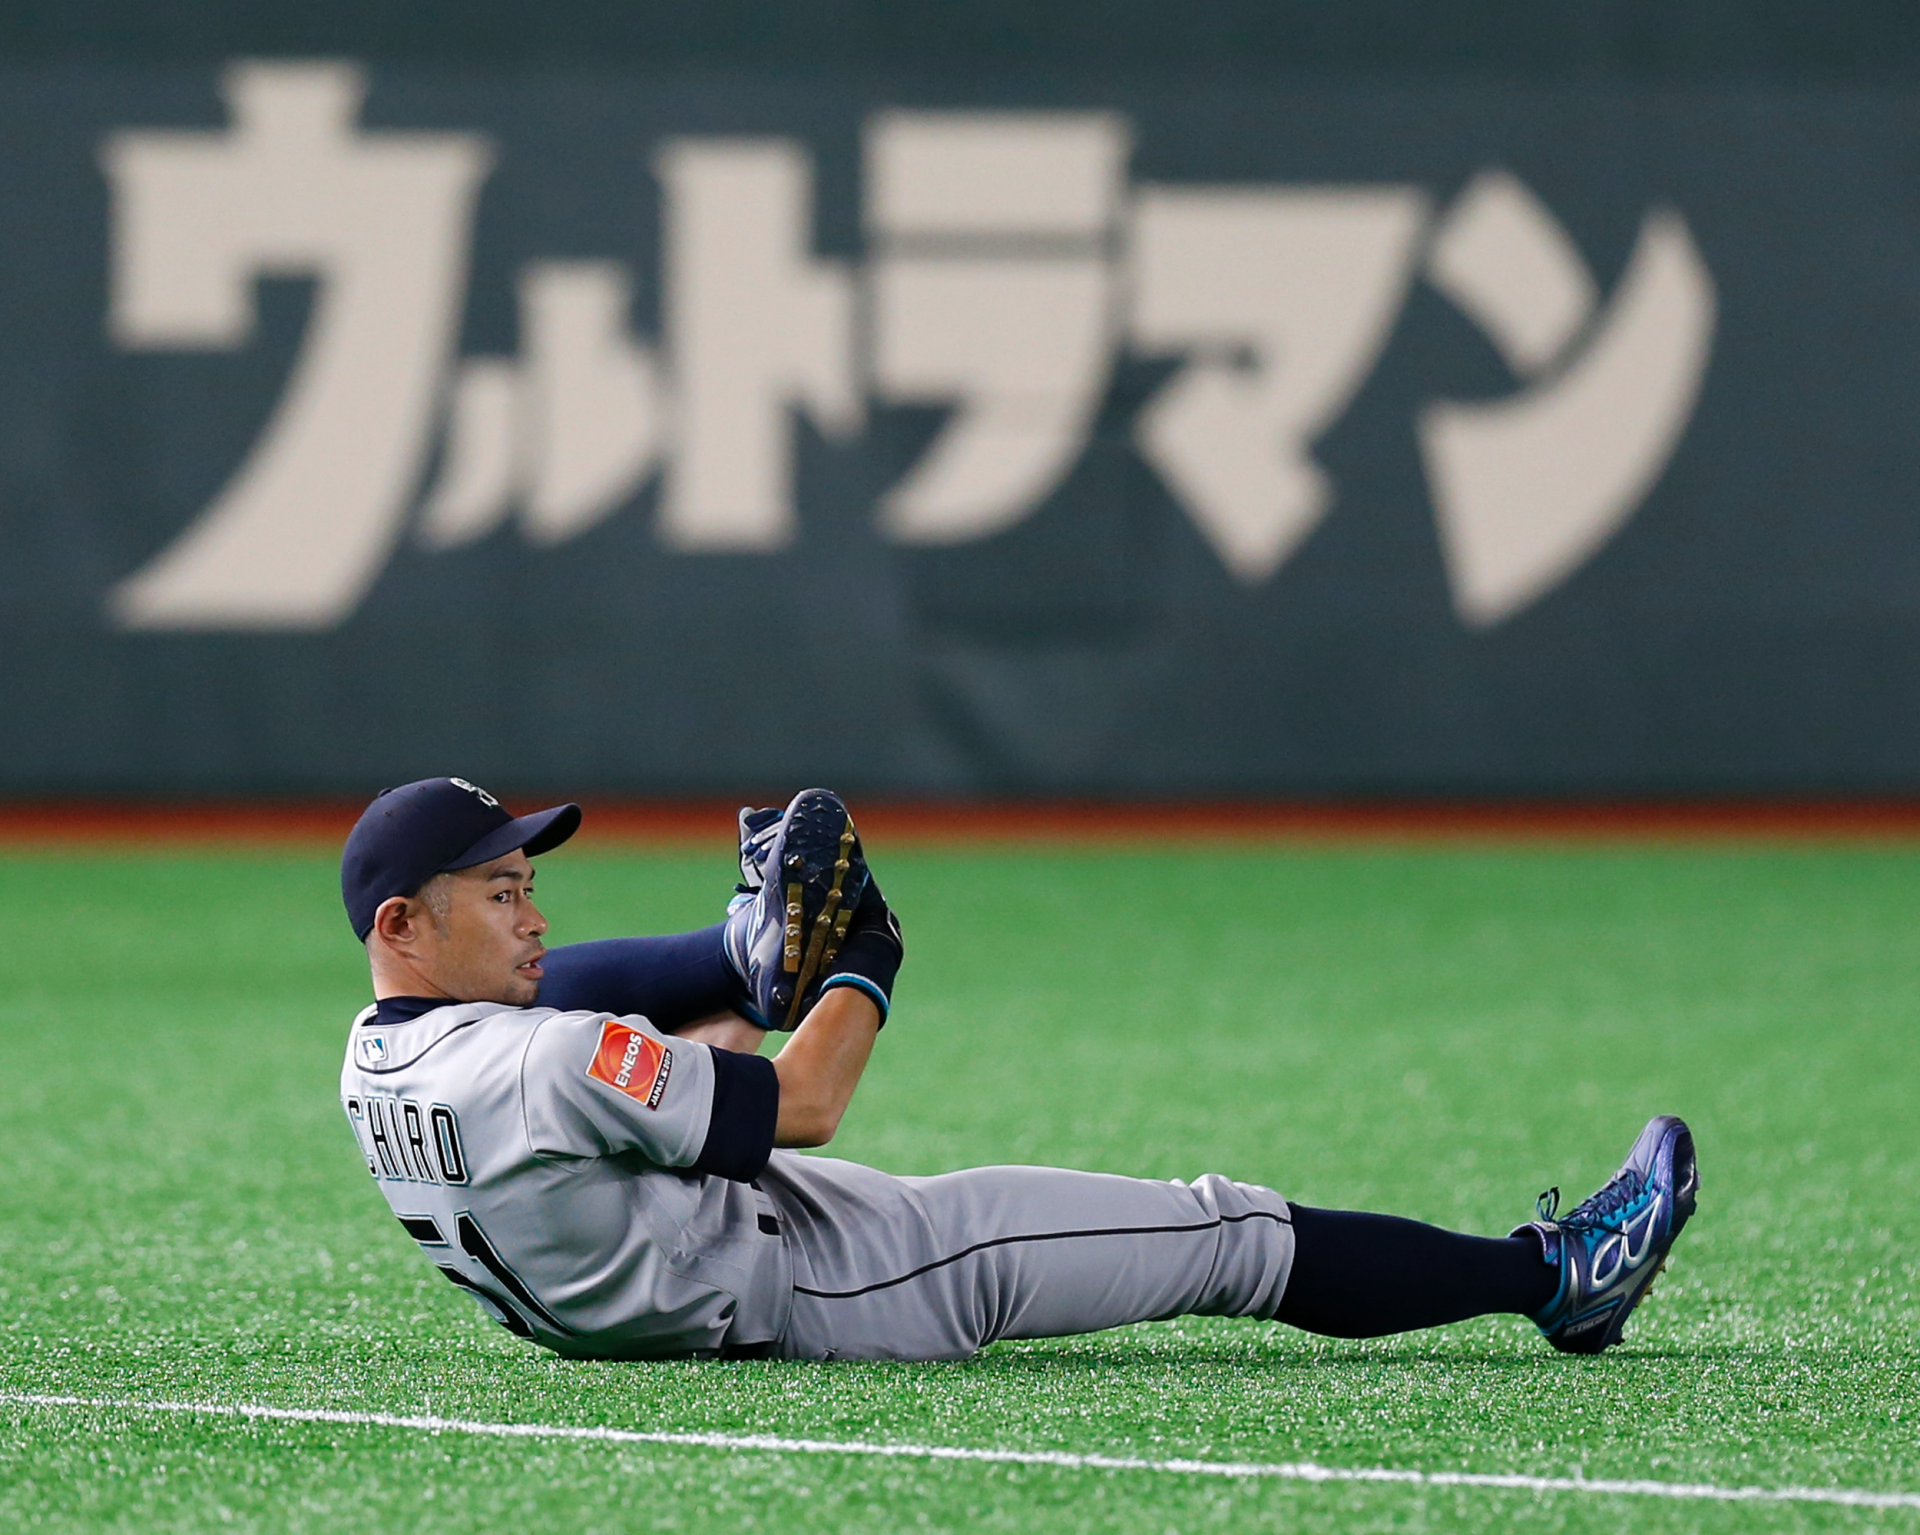 Ichiro walks off into history at Tokyo Dome